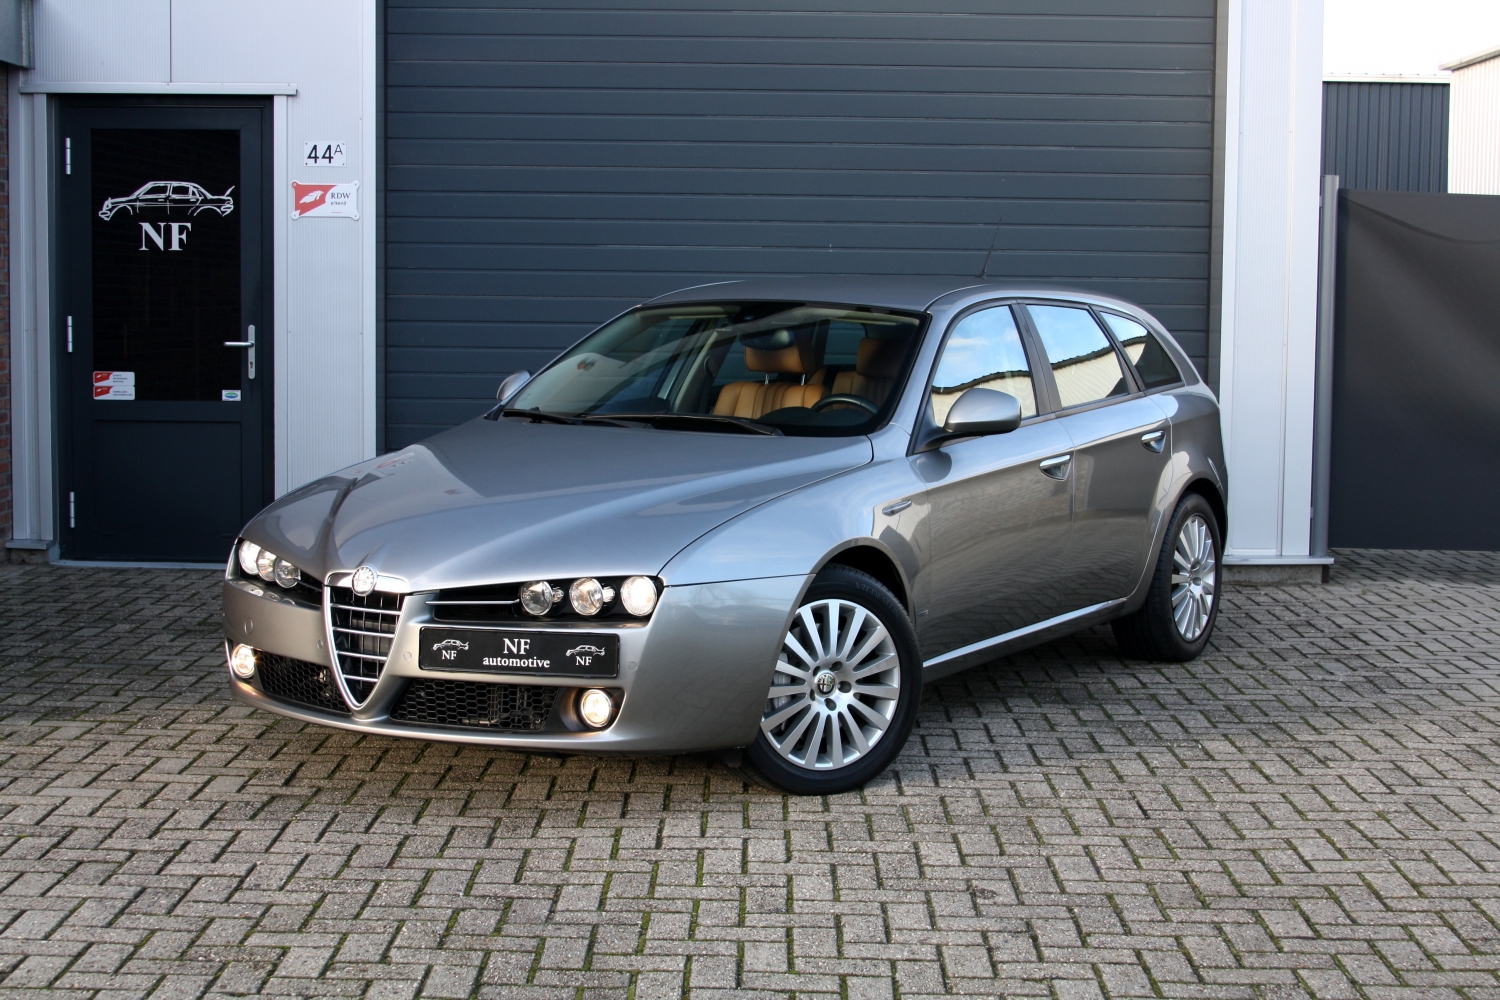 Romeo 159 3.2 V6 Q4 kopen bij NF Automotive